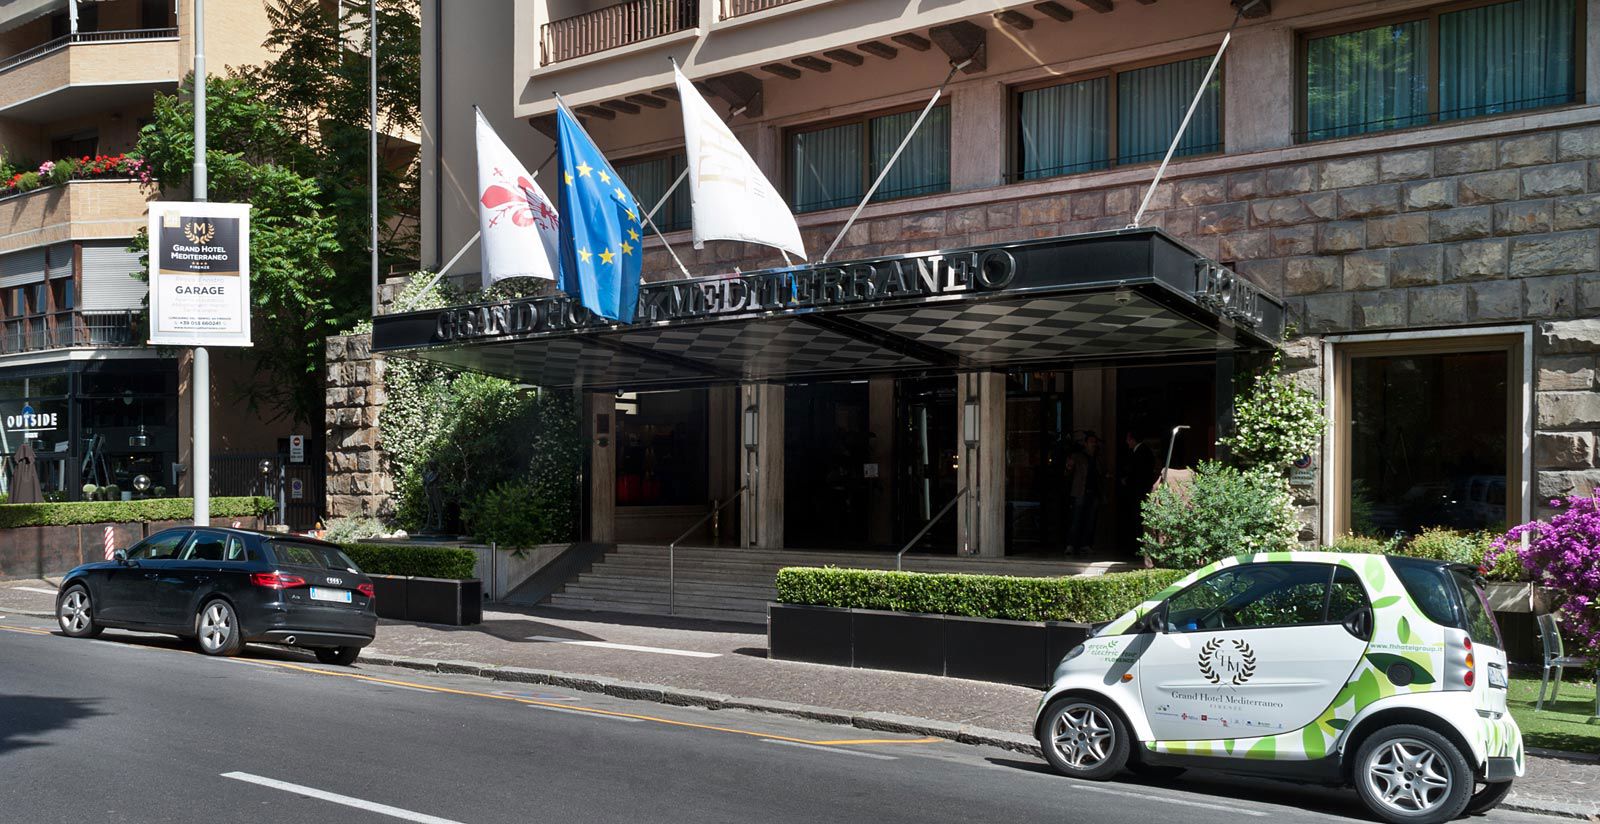 Grand Hotel Mediterraneo - informations sur la société 3